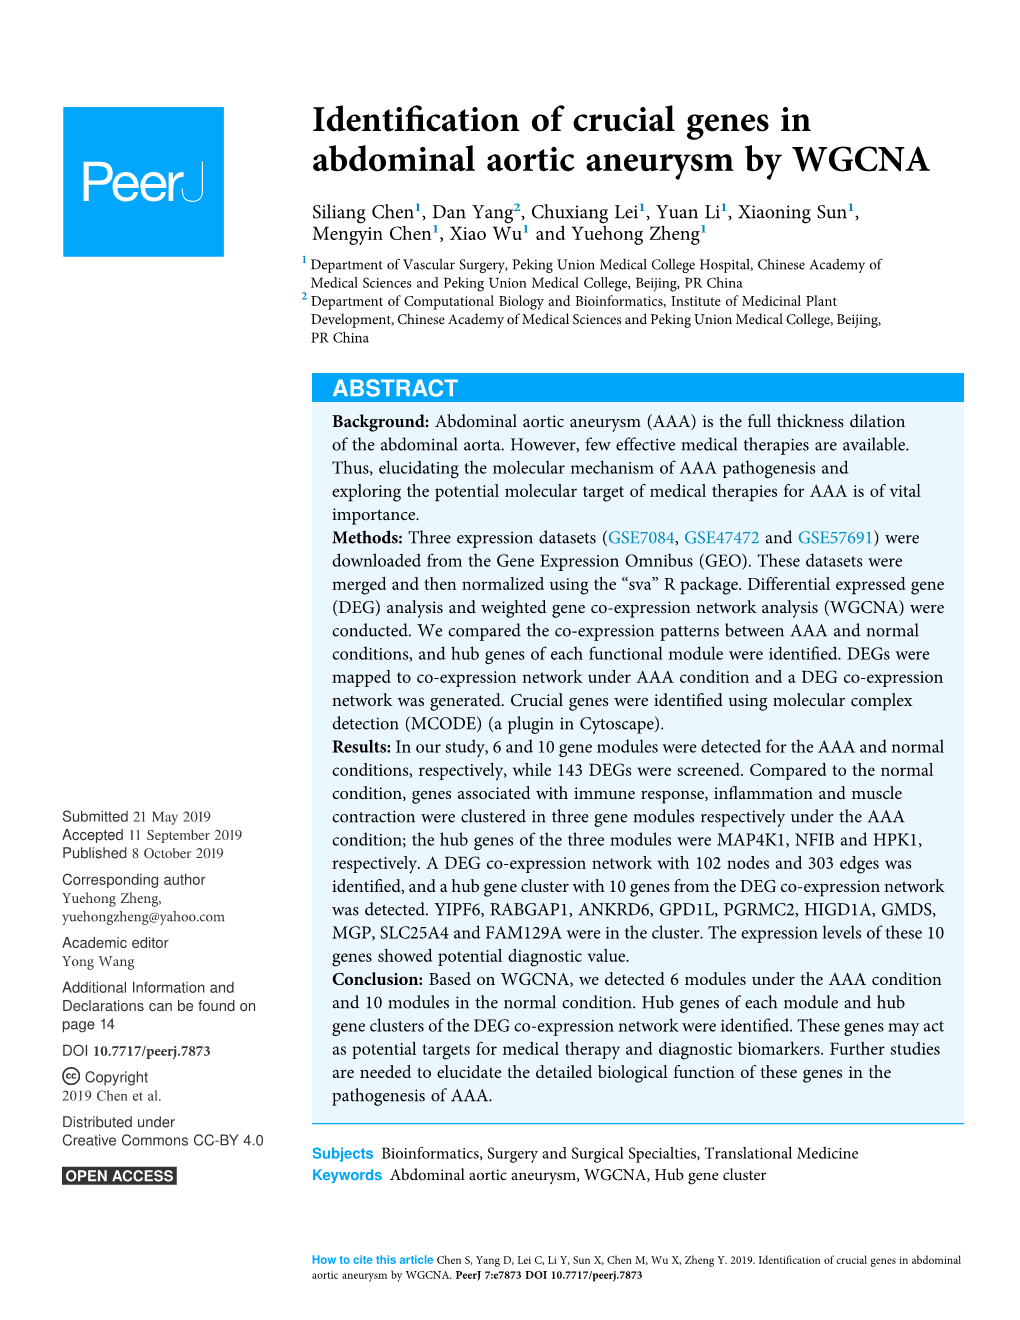 Identification of Crucial Genes in Abdominal Aortic Aneurysm by WGCNA